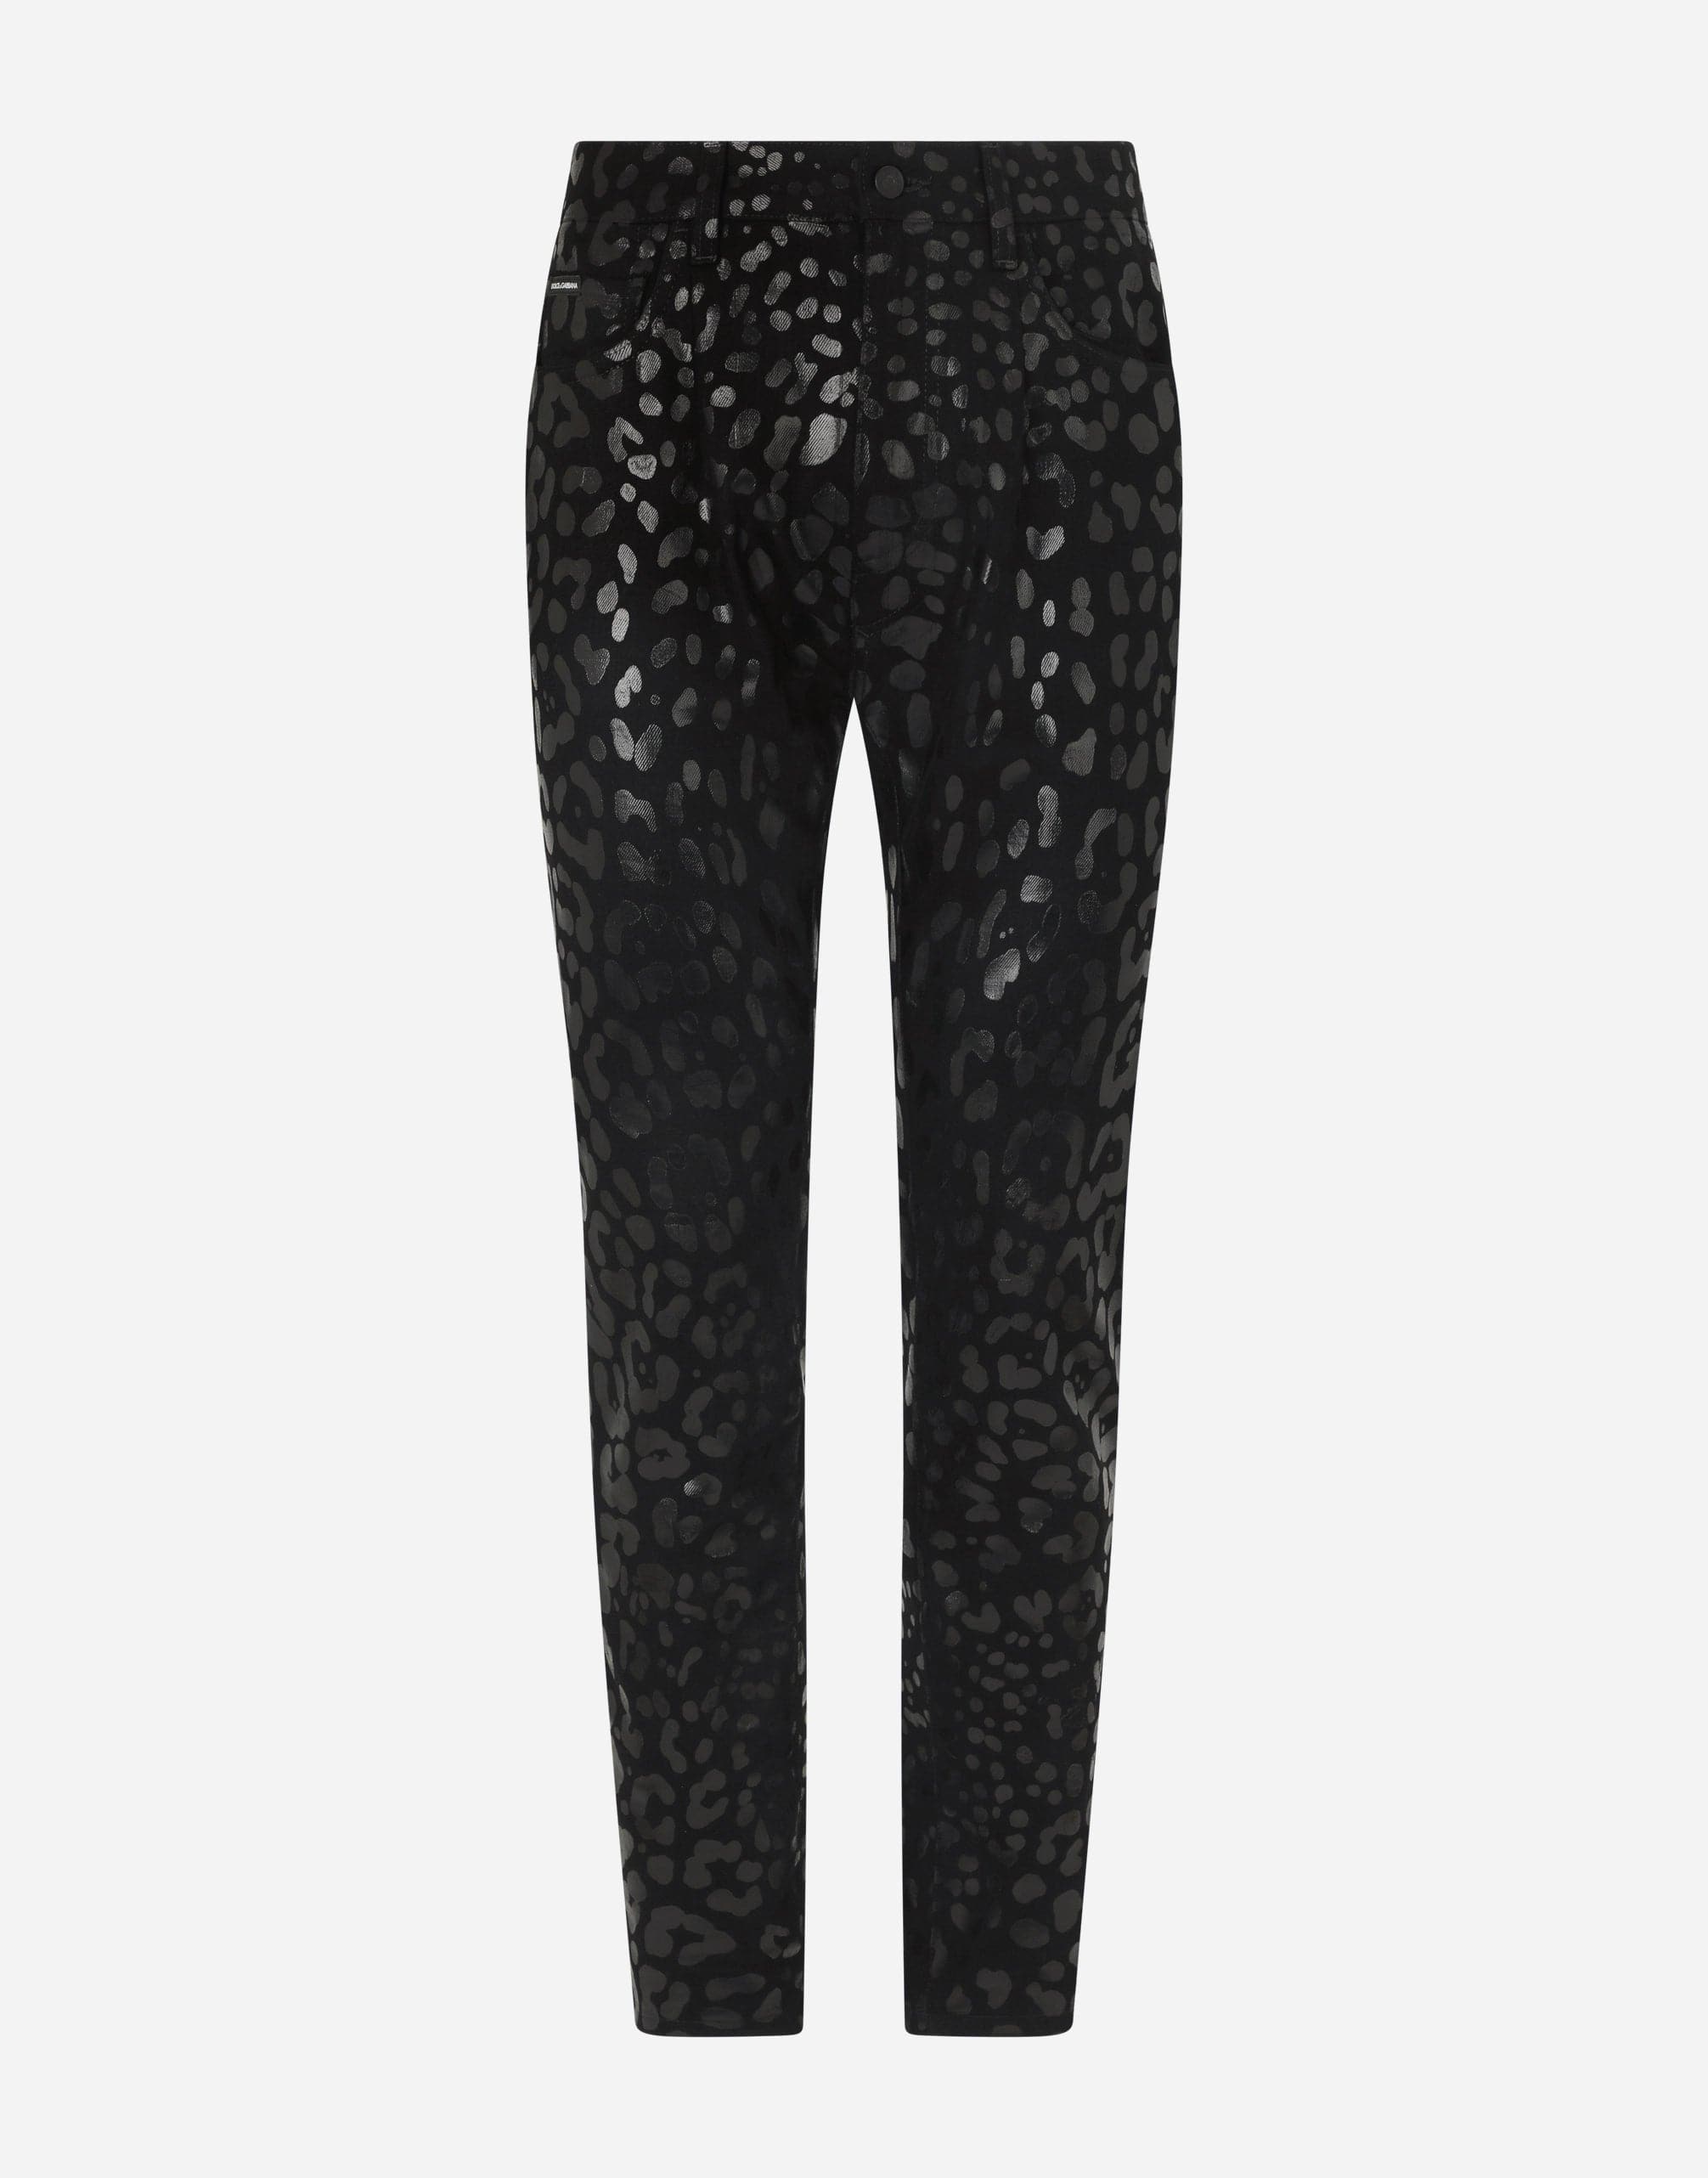 Dolce & Gabbana Flocked Leopard-Print Slim-Fit Jeans